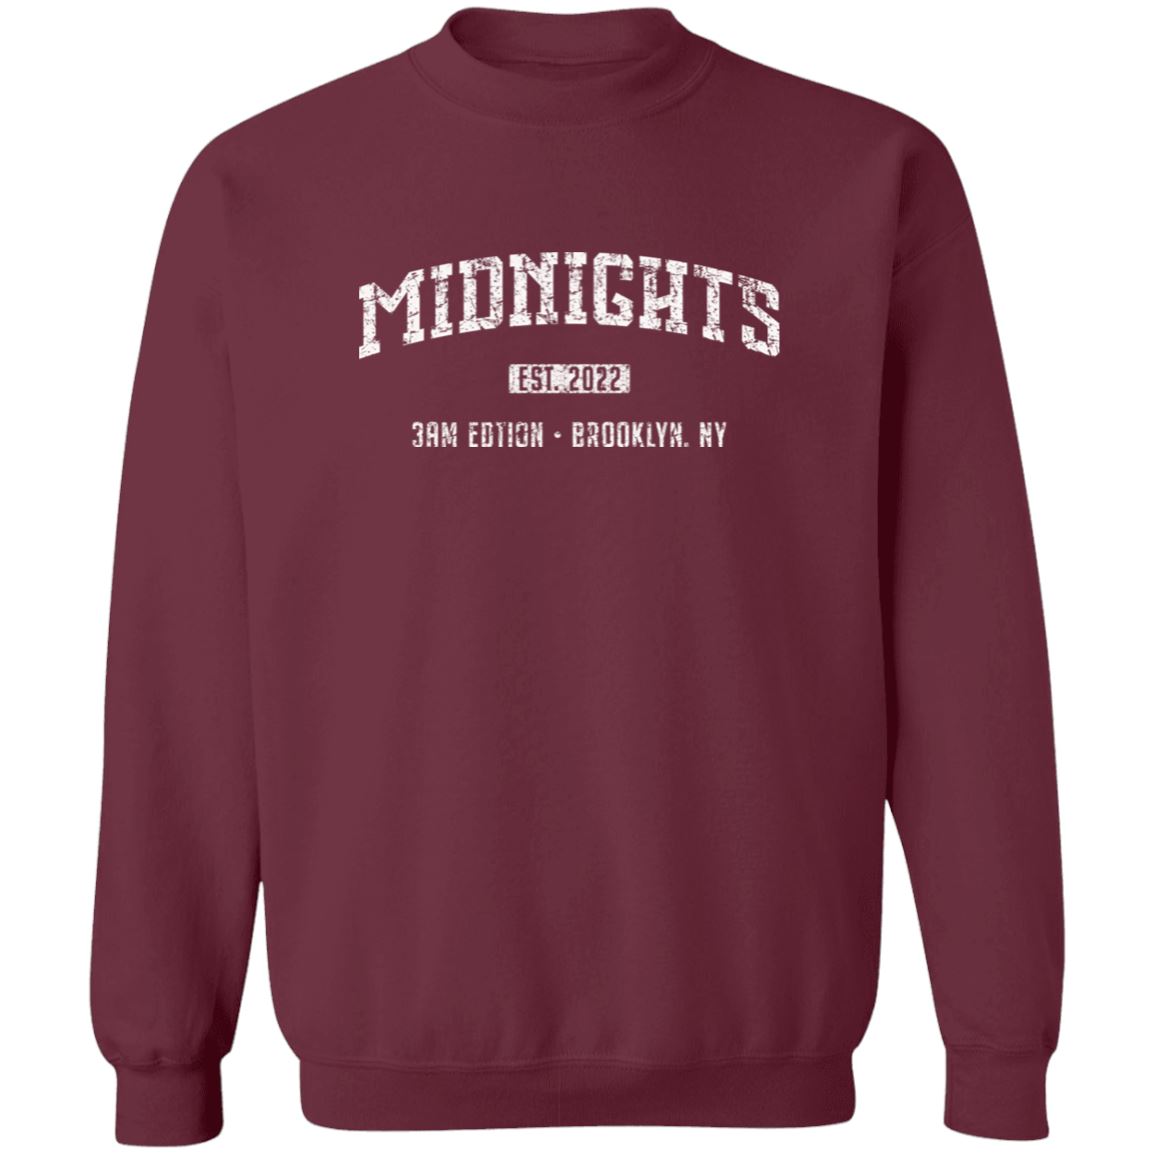 Midnights _Custom Cat Stock Items Sweatshirts CustomCat Maroon S 